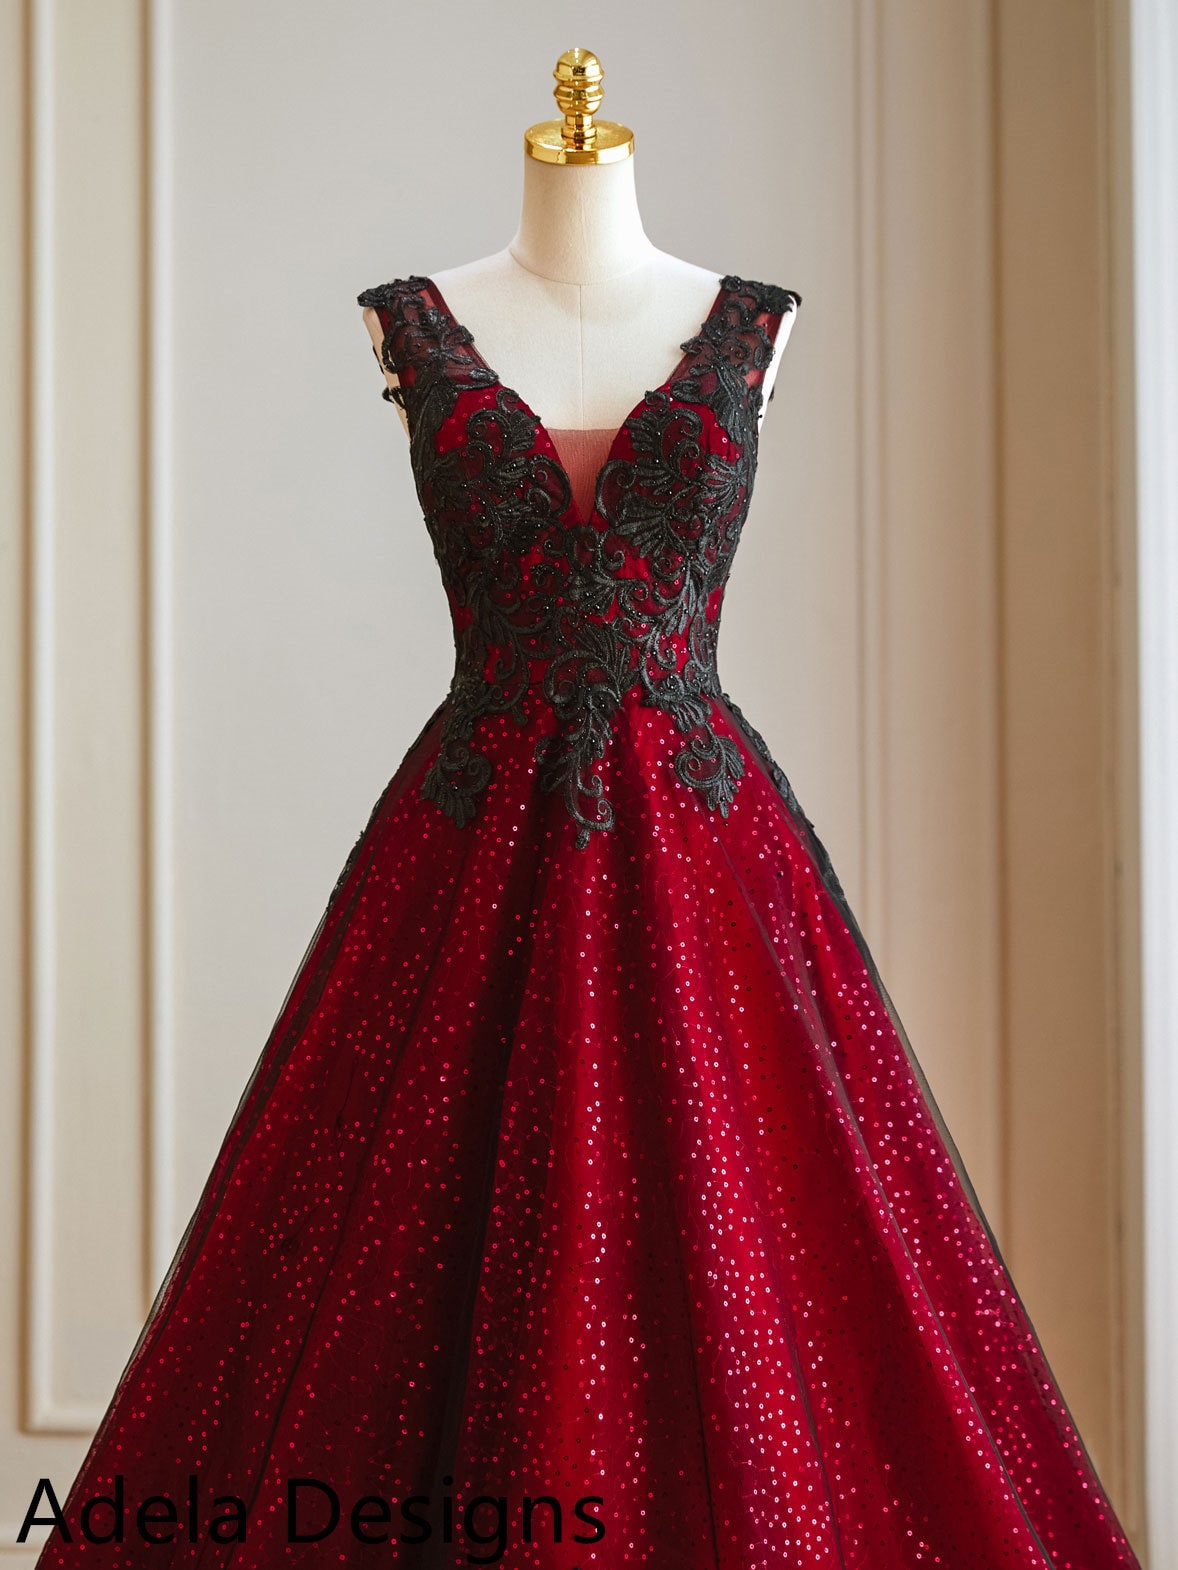 Black And Red ALine Gown Gothic Wedding Dress Bridal V Neckline Lace Bare Shoulders Open Back Unique Design Sparkle Dress Corset Back